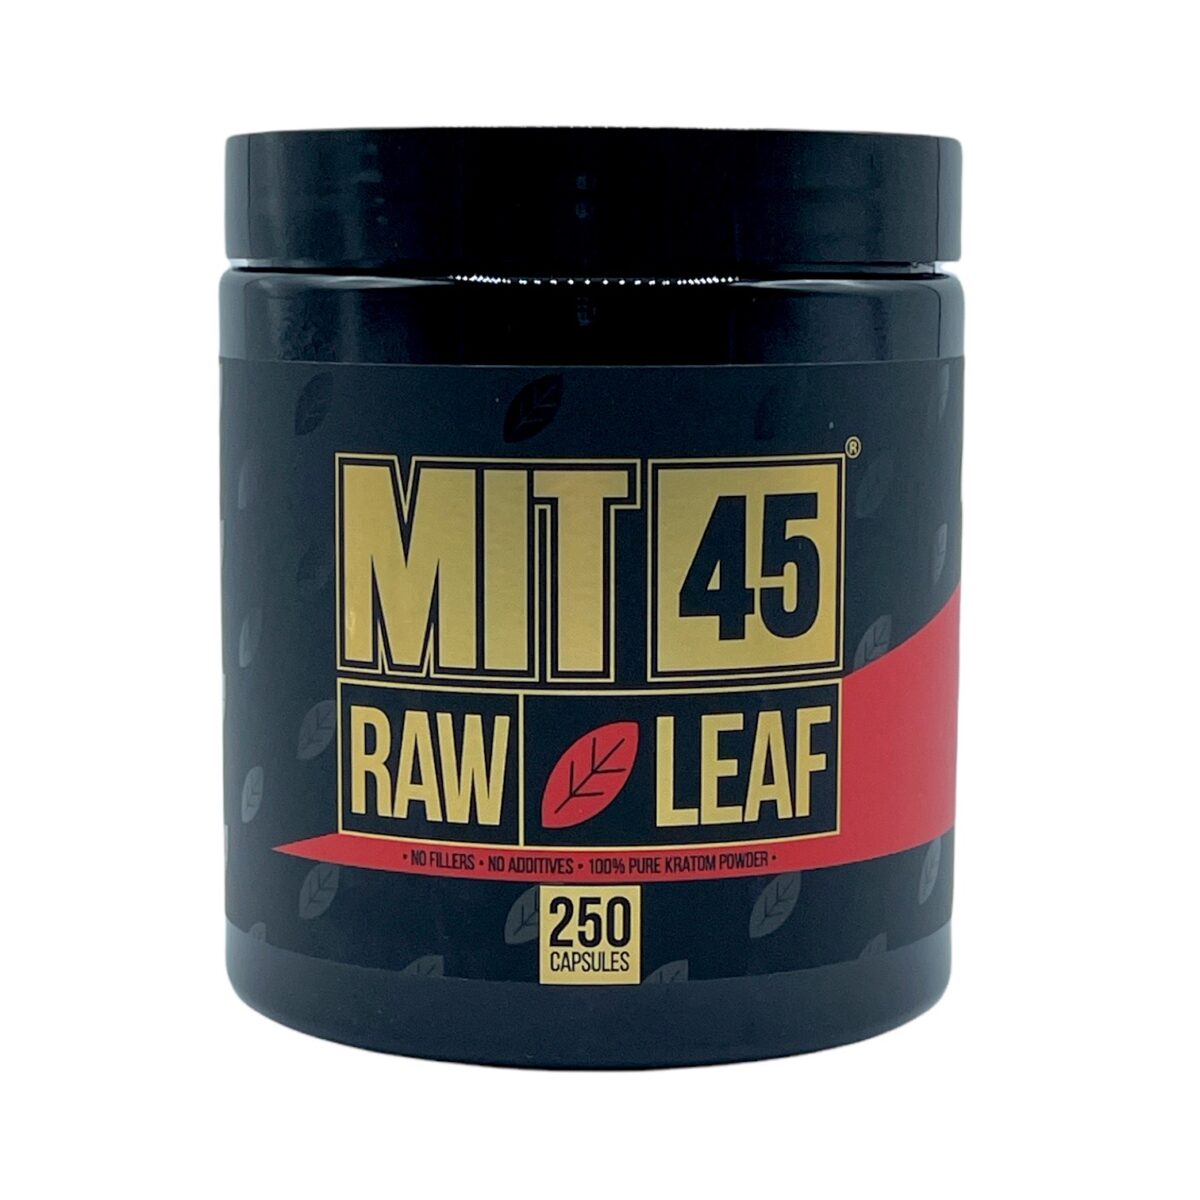 MIT 45 Raw Red Leaf Kratom Capsules